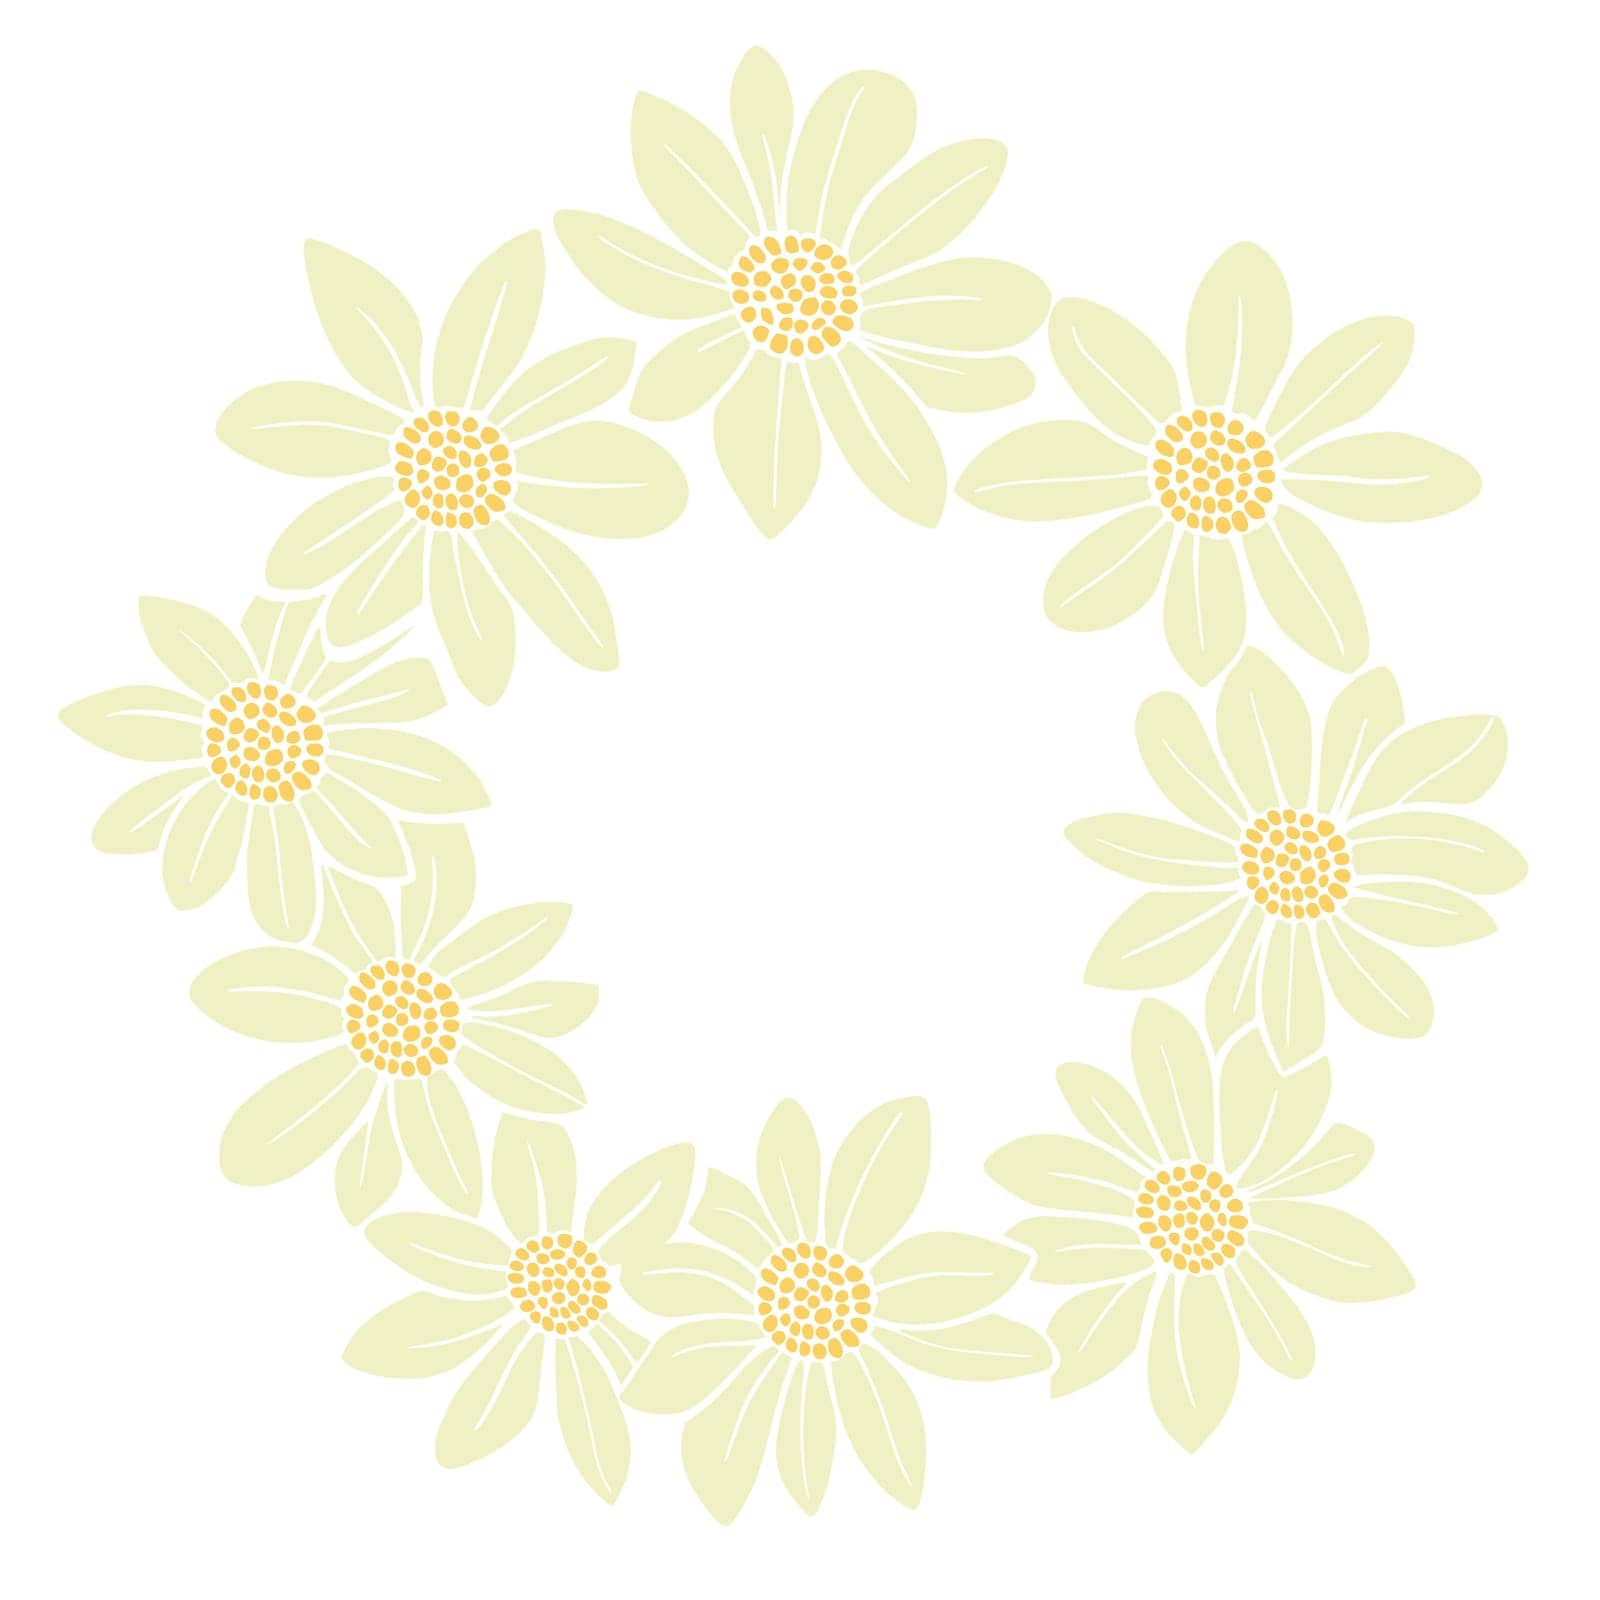 Delicate floral chamomile wreath by TassiaK